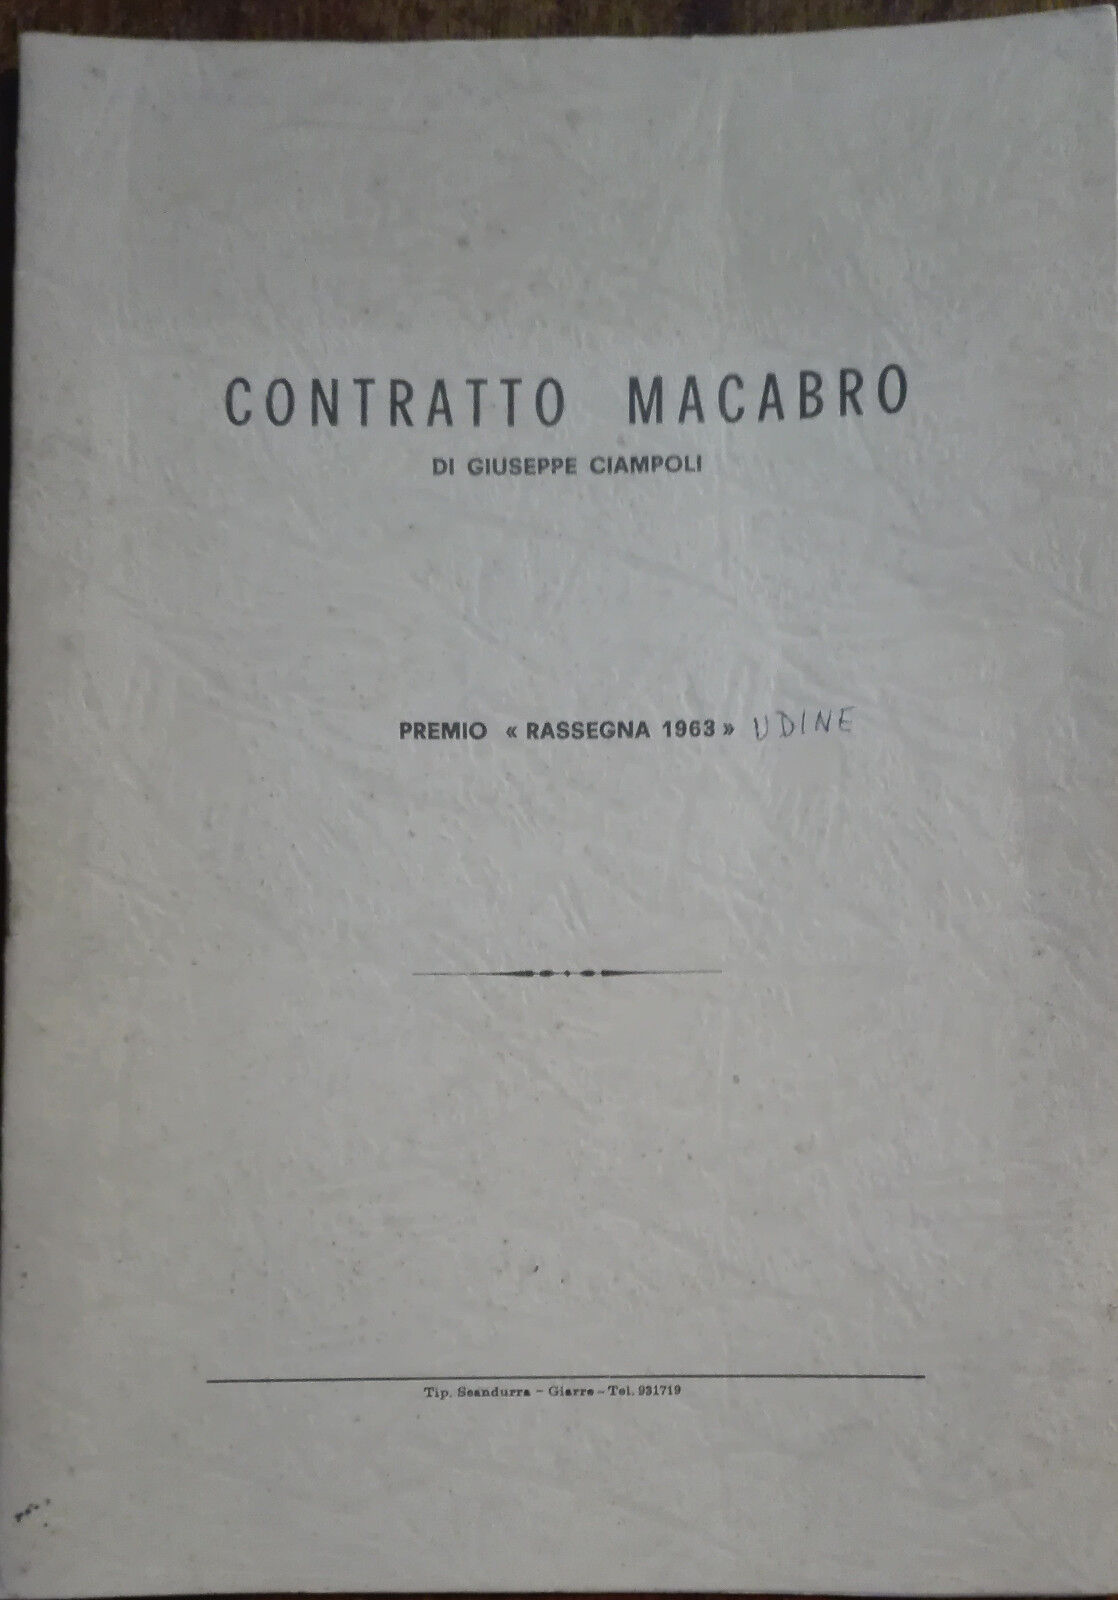 Contratto Macabro - Giuseppe Ciampoli - Scandurra,1963 - A